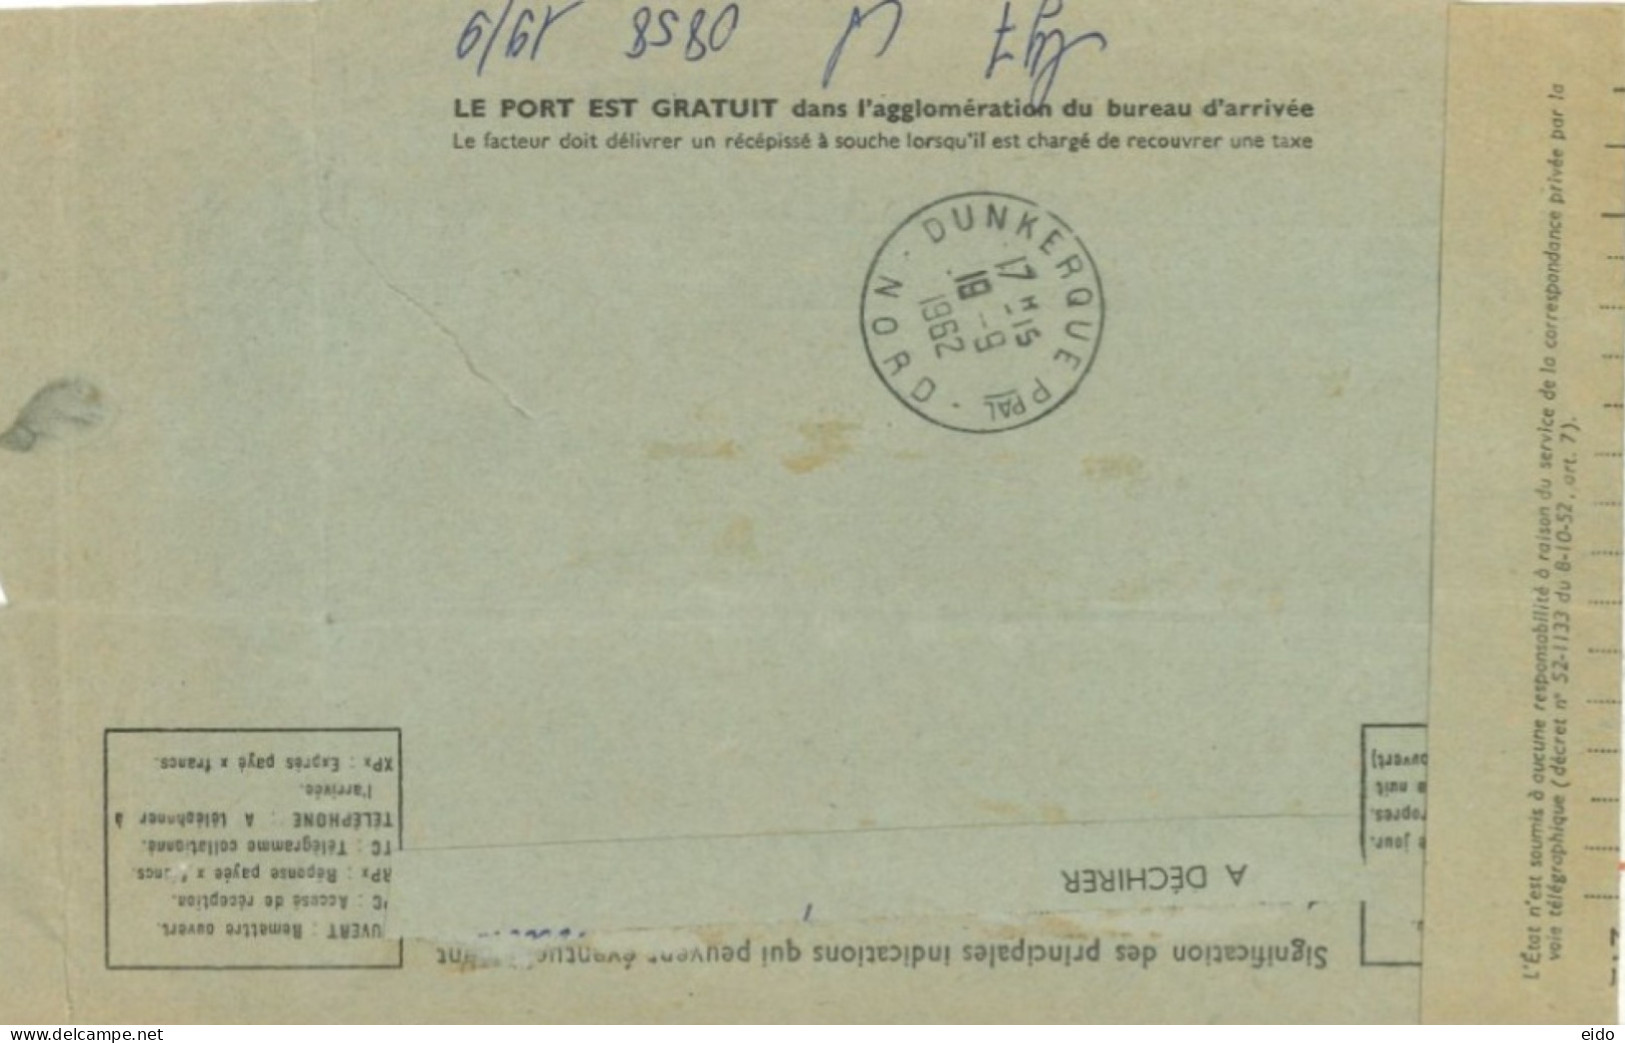 FRANCE - 1962, POSTAL TELEGRAM OF SHIPMENT ARRIVAL TO DUNKIRK PORT . - Telegraph And Telephone